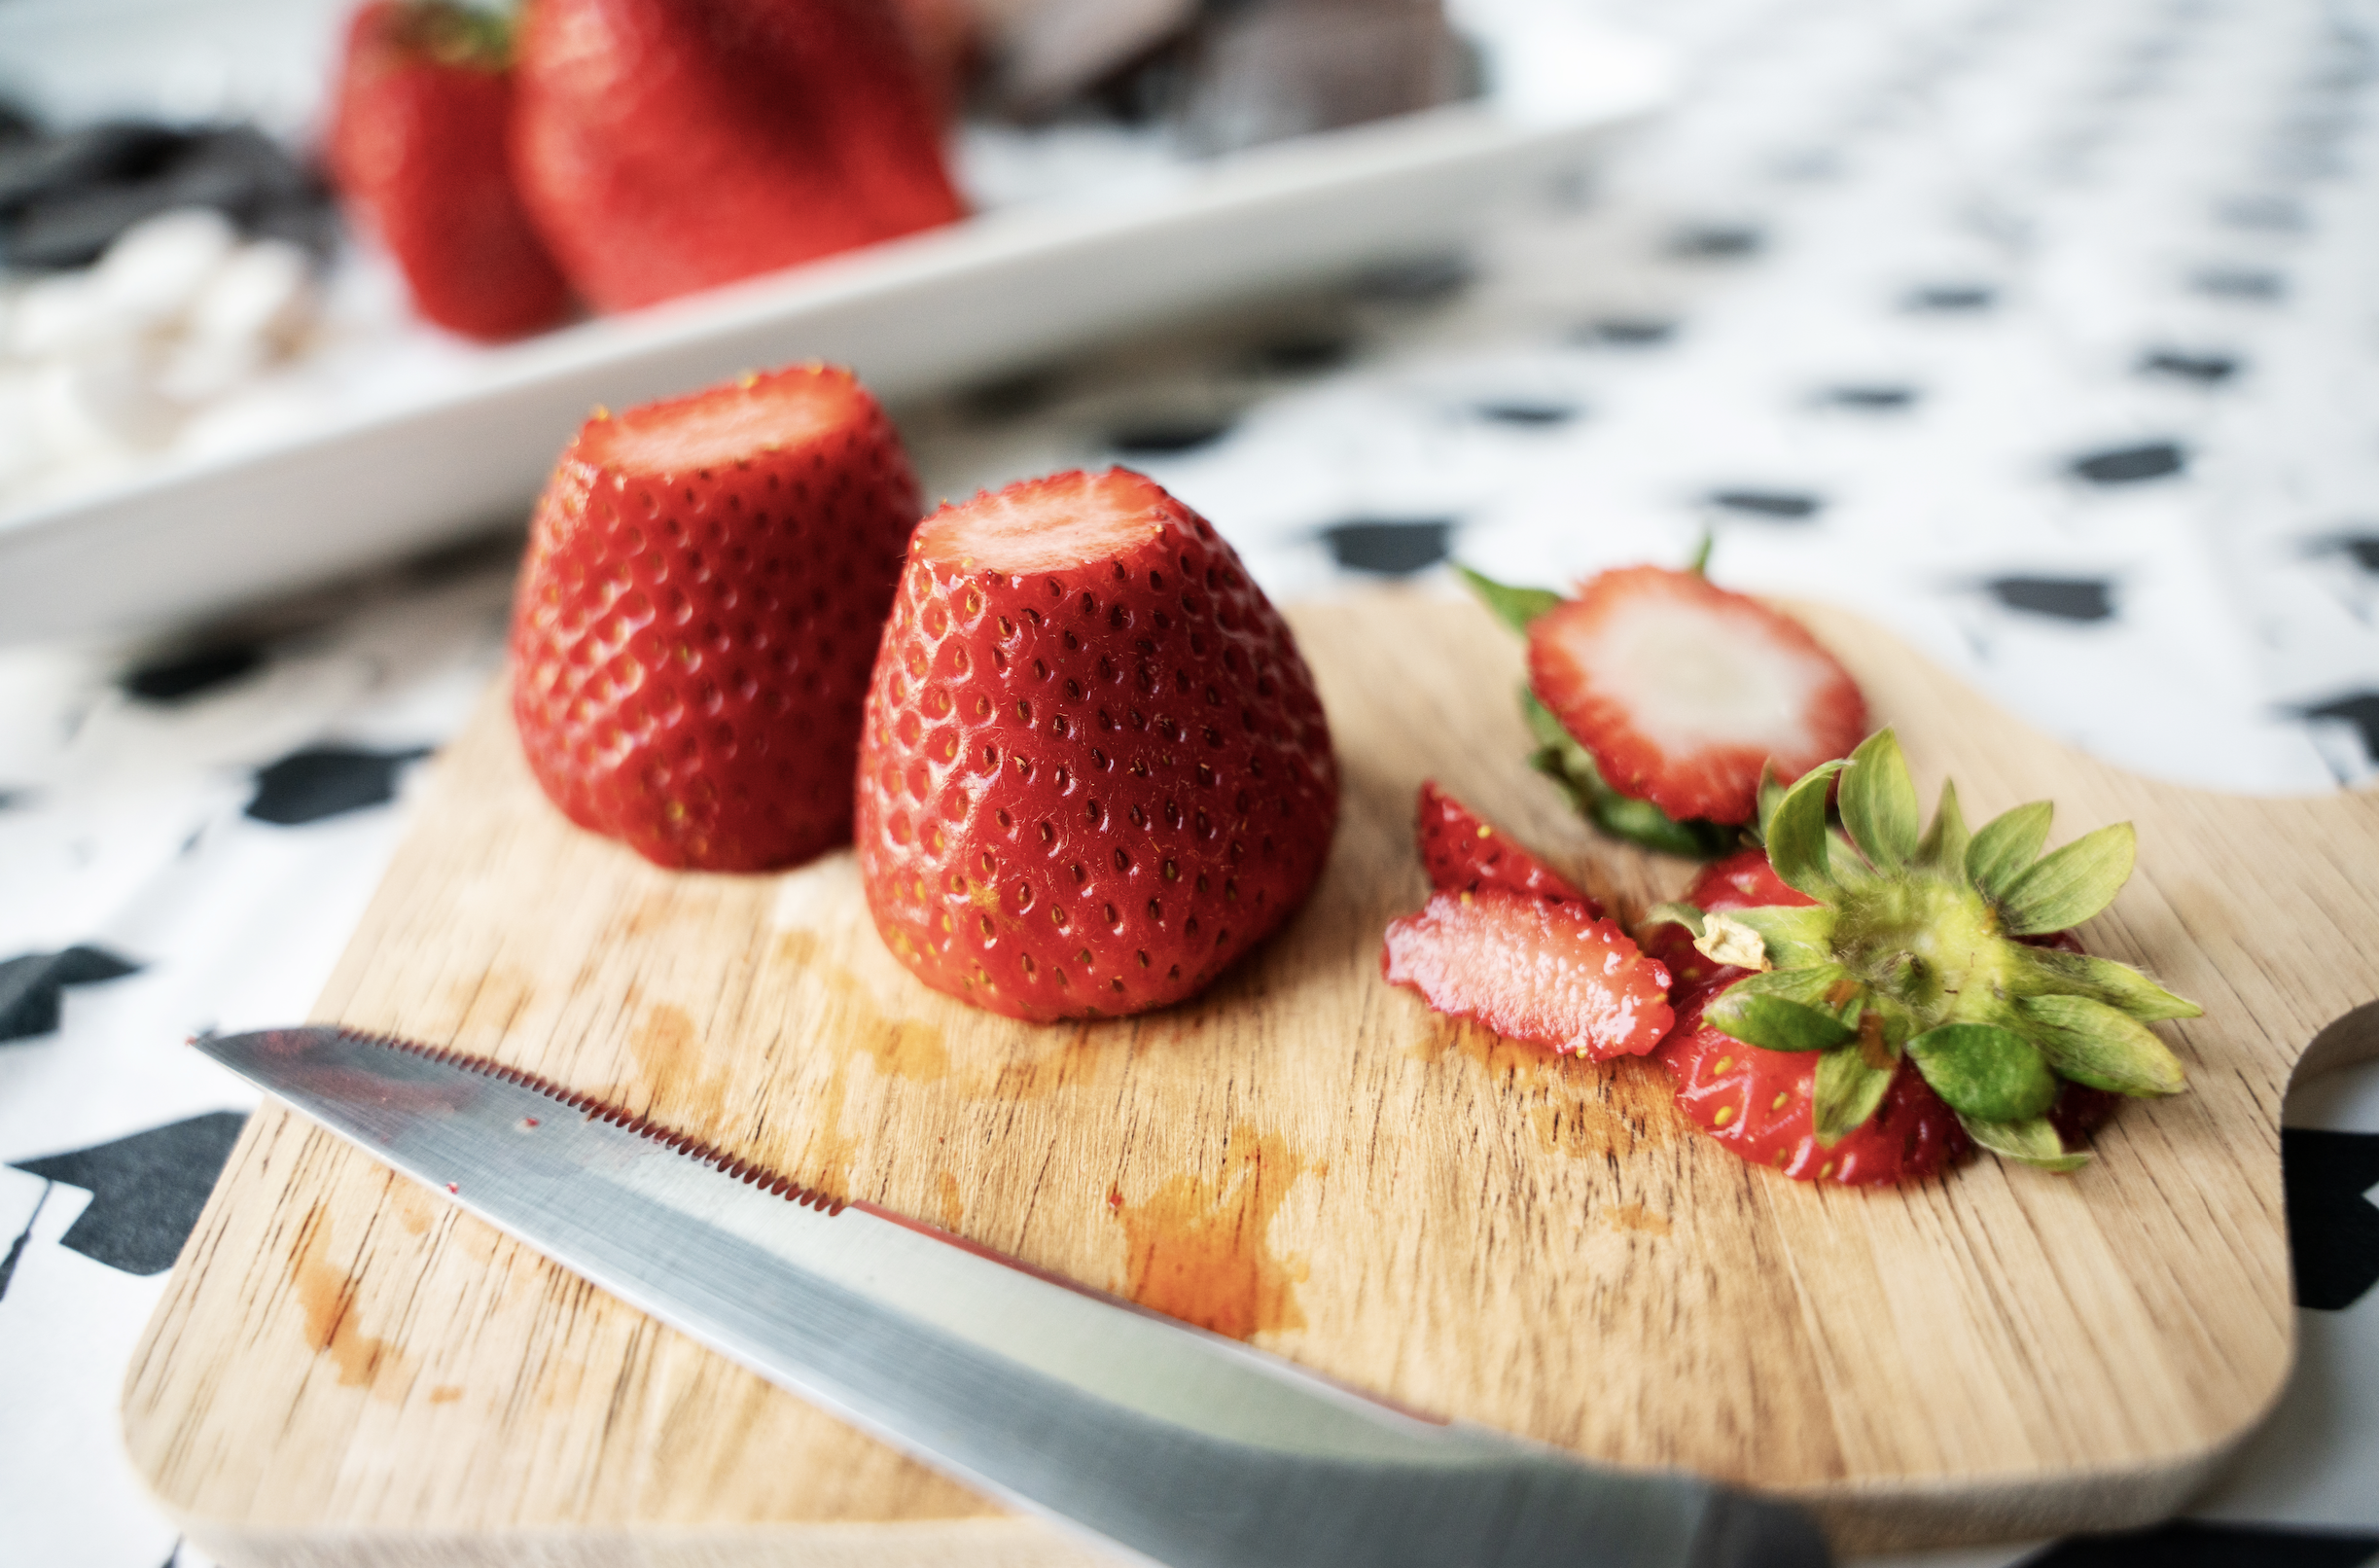 Graduation Dessert: Tops cut off the strawberries